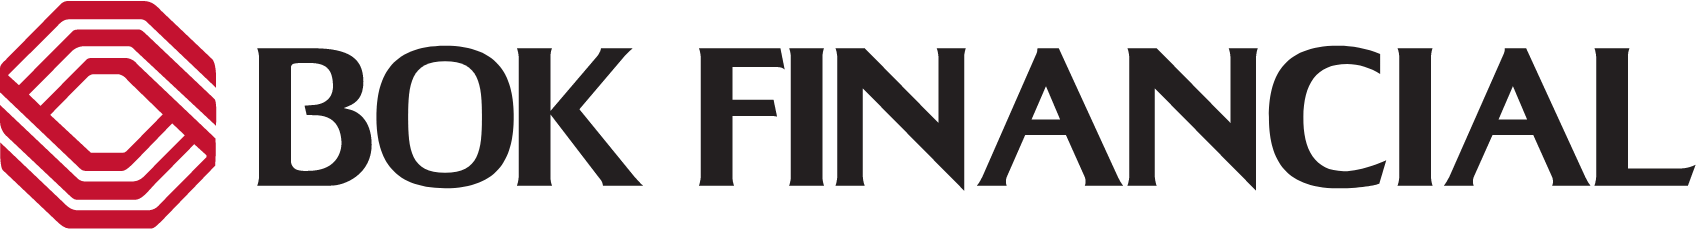 BOK Financial logo large (transparent PNG)